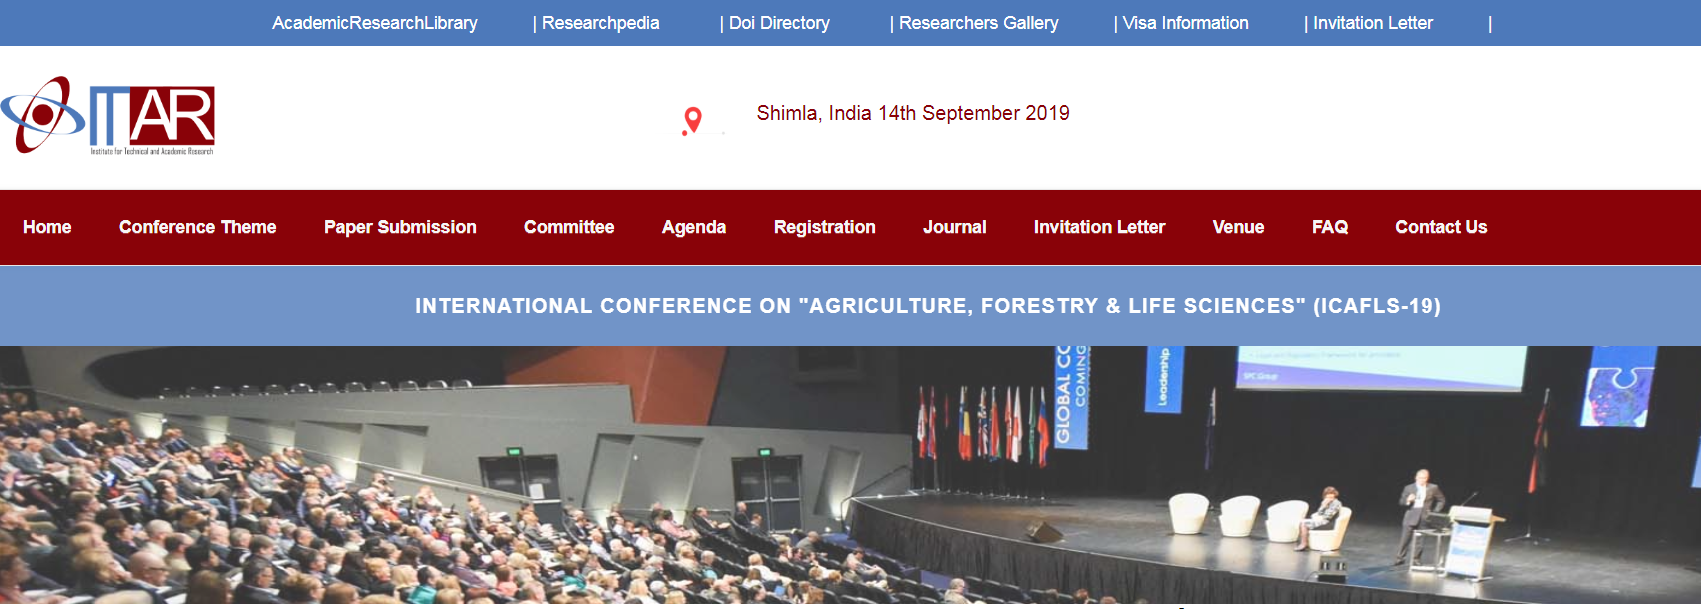 International Conference on "Agriculture, Forestry & Life Sciences" (ICAFLS-19), Shimla, Himachal Pradesh, India